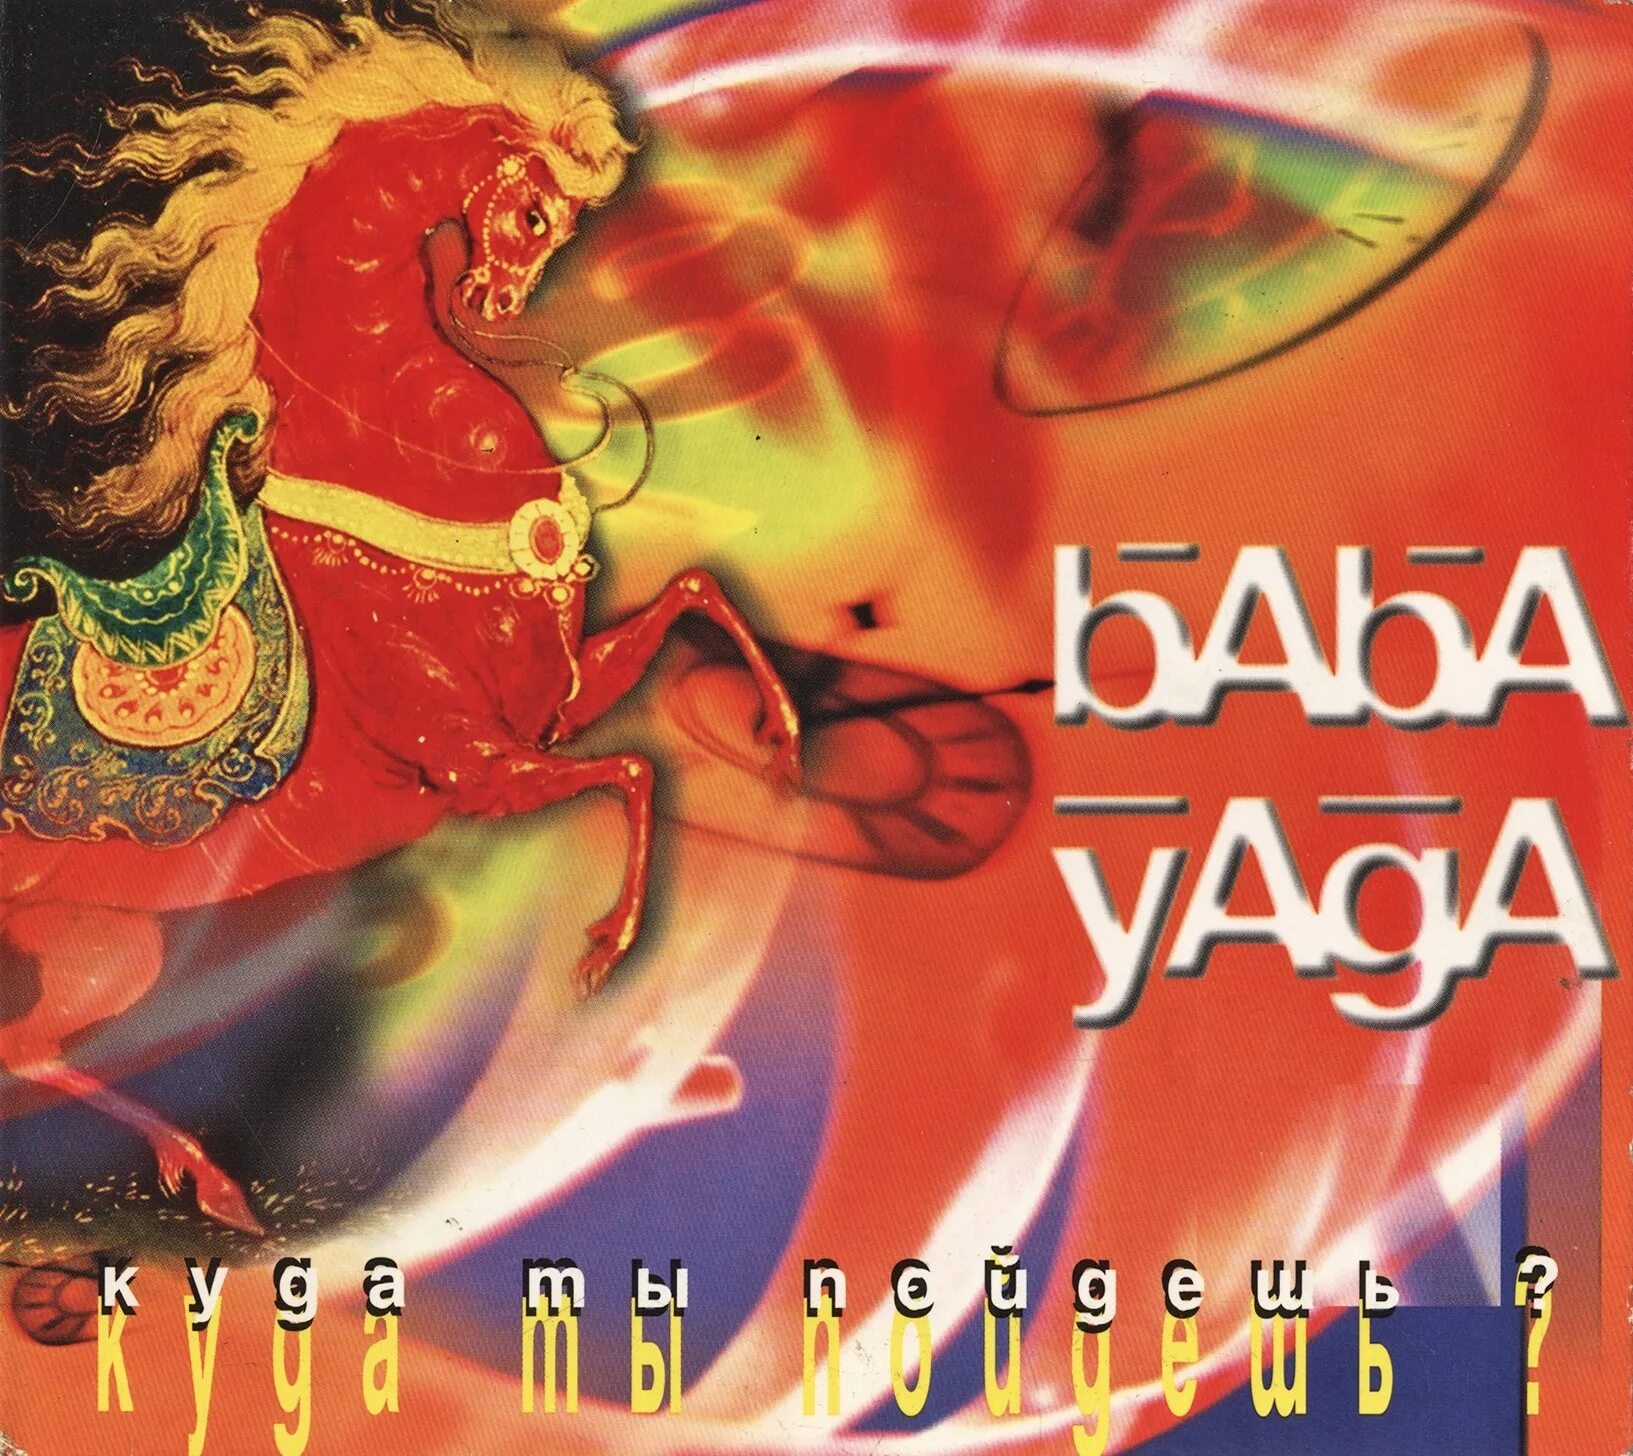 Группа баба яга ой не вечер. Группа Baba Yaga. Баба Яга so ends another Day. Baba Yaga - 1993 - куда ты пойдешь. Гр на на баба Яга.